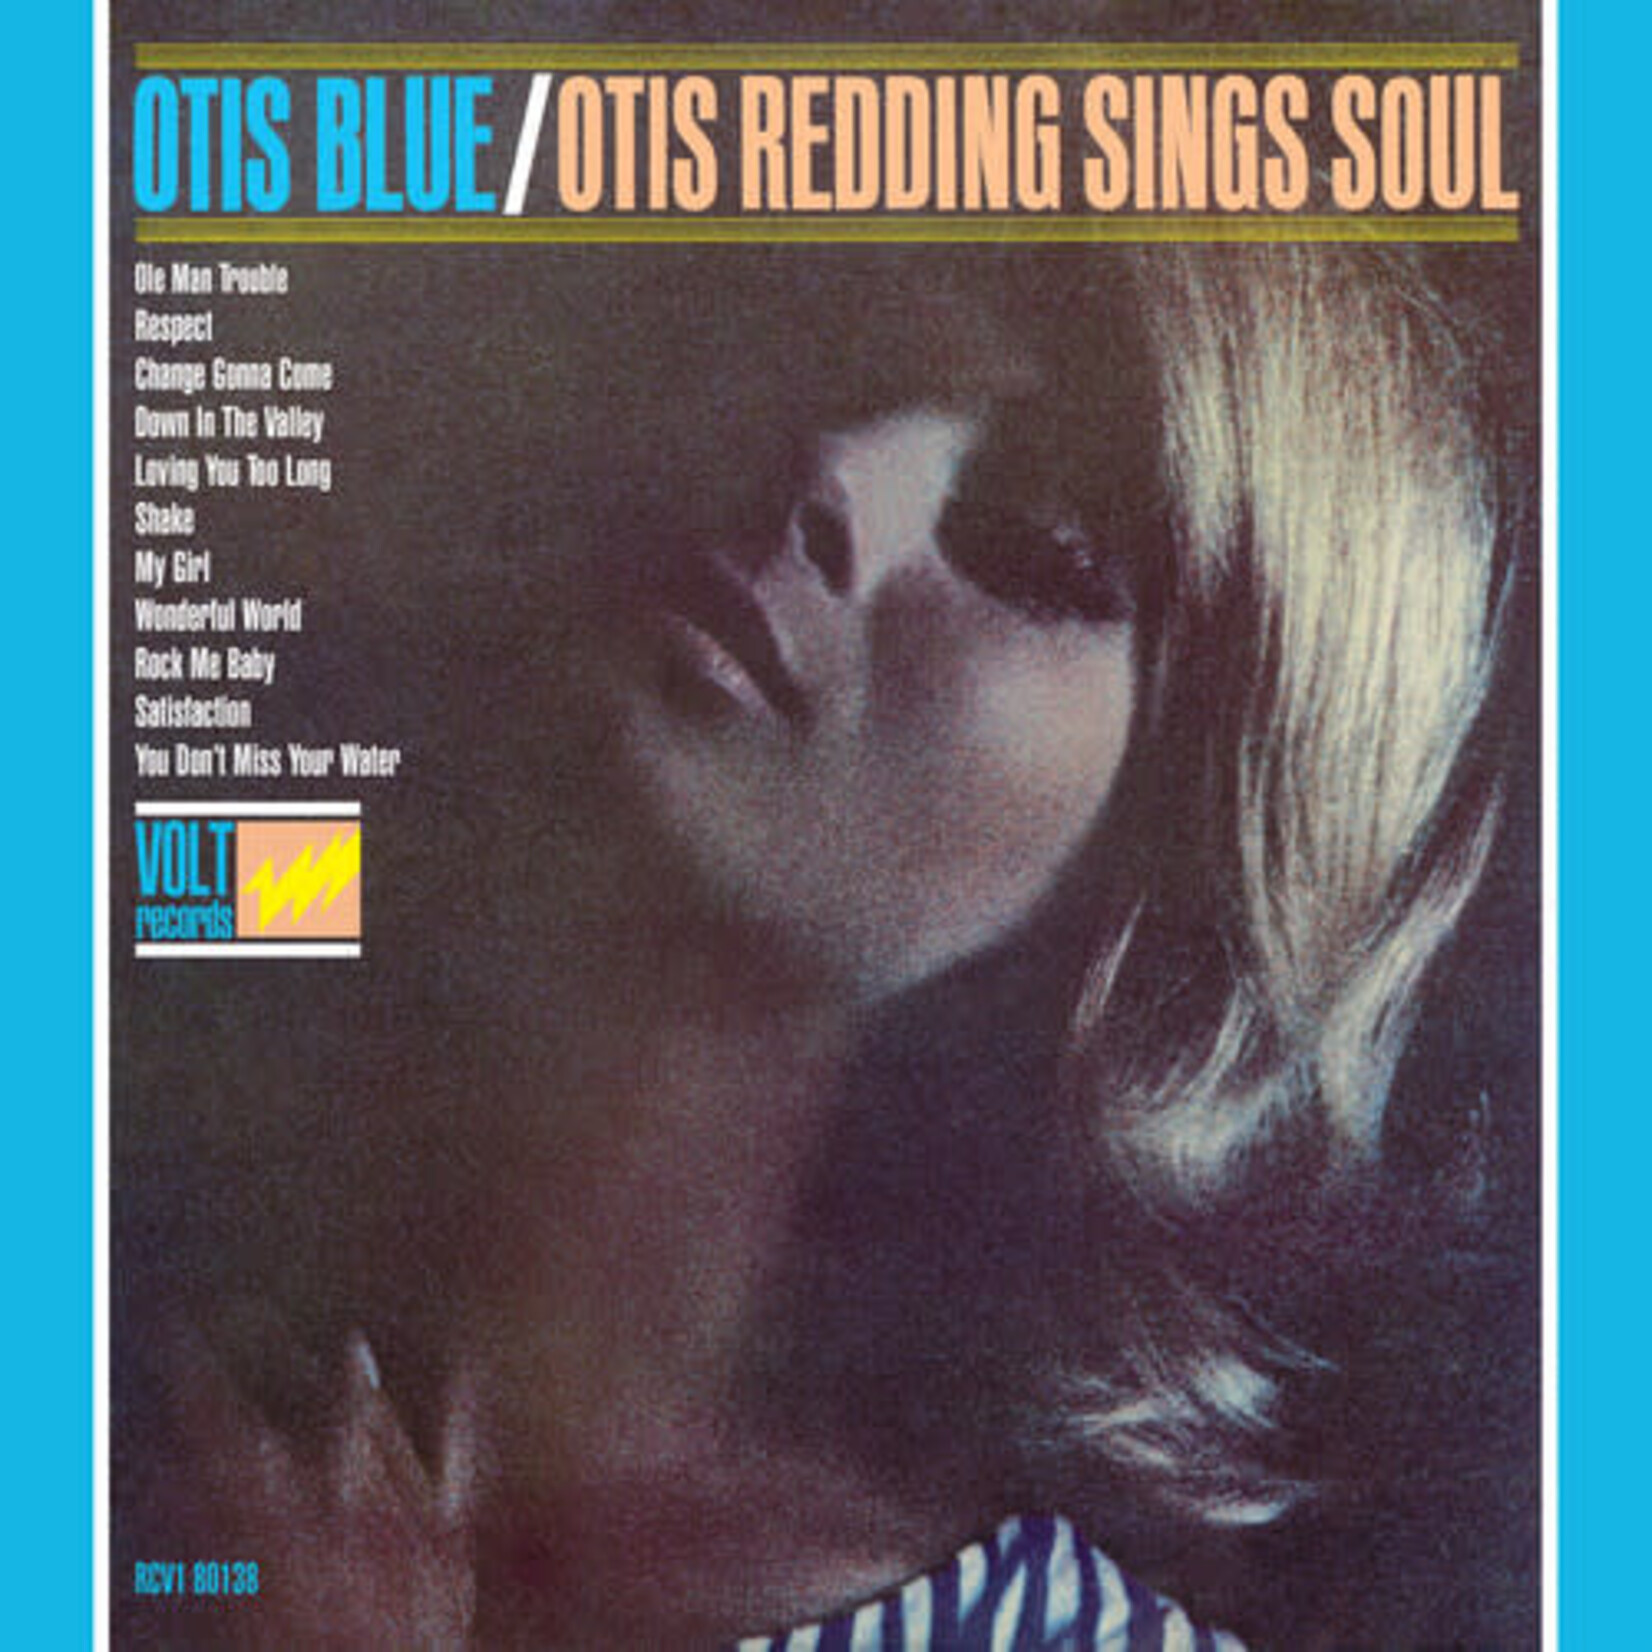 Atlantic Otis Redding - Otis Blue: Otis Redding Sings Soul (LP)